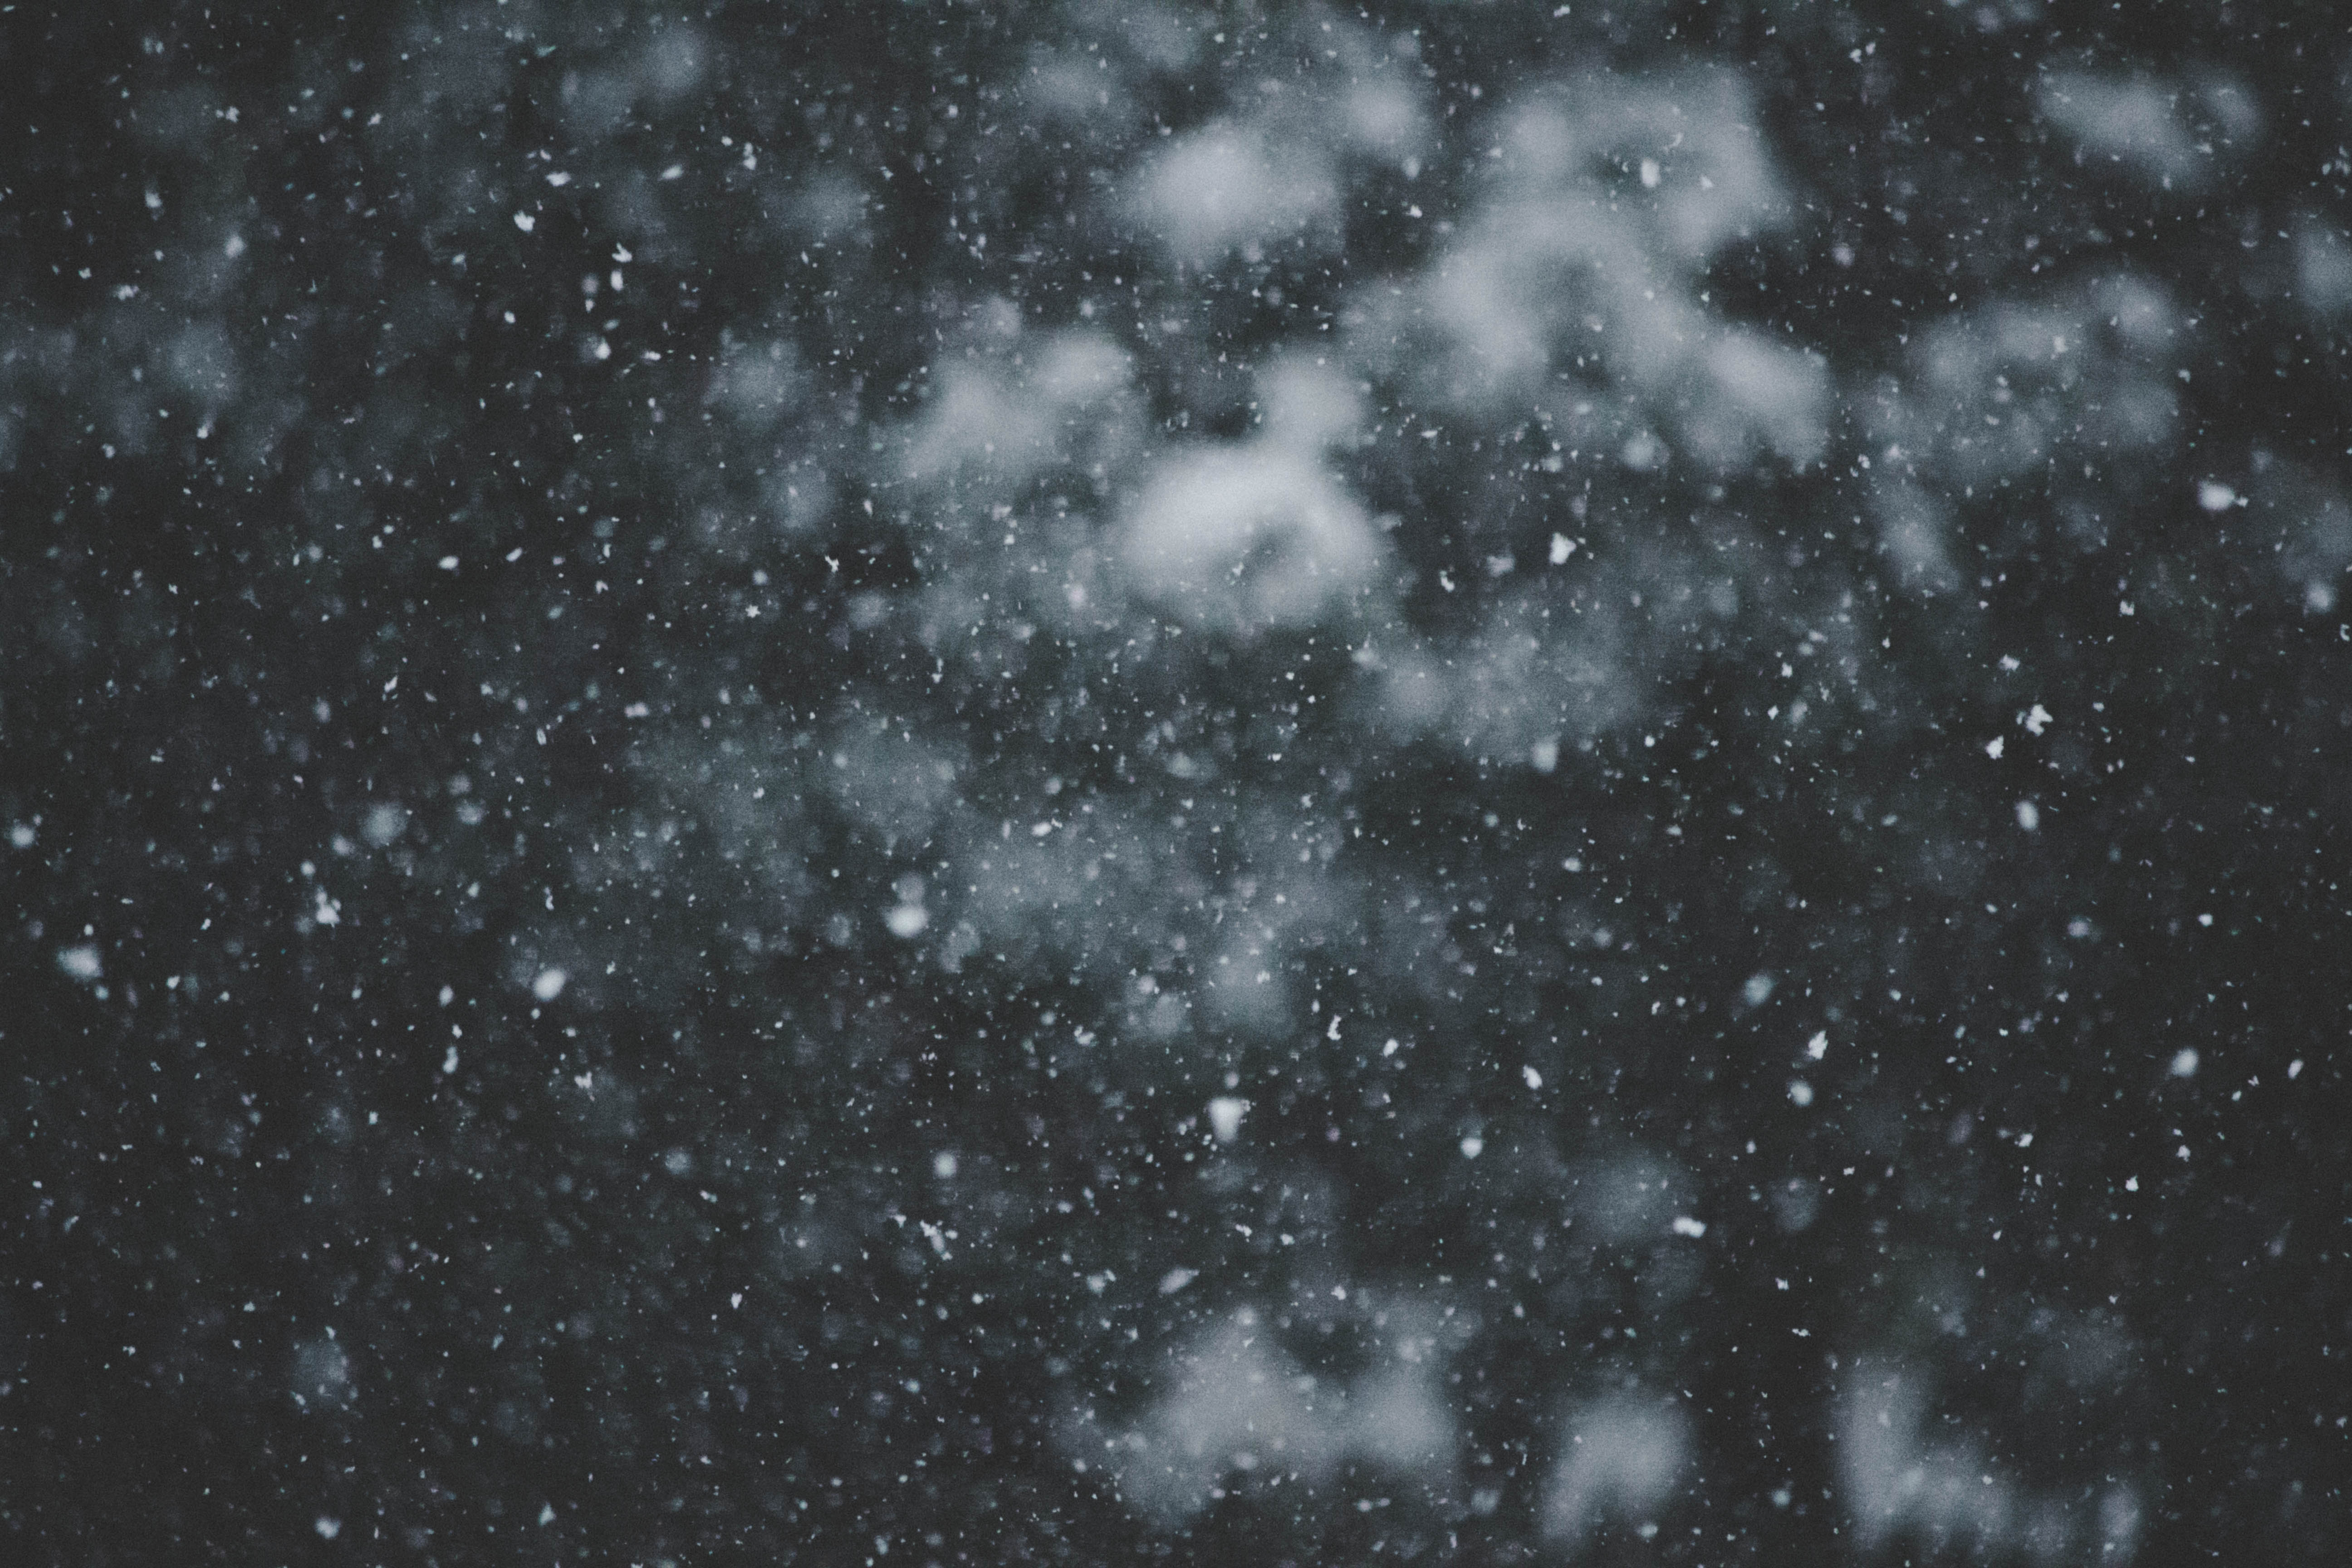 Snow Wallpaper: Free HD Download [HQ]